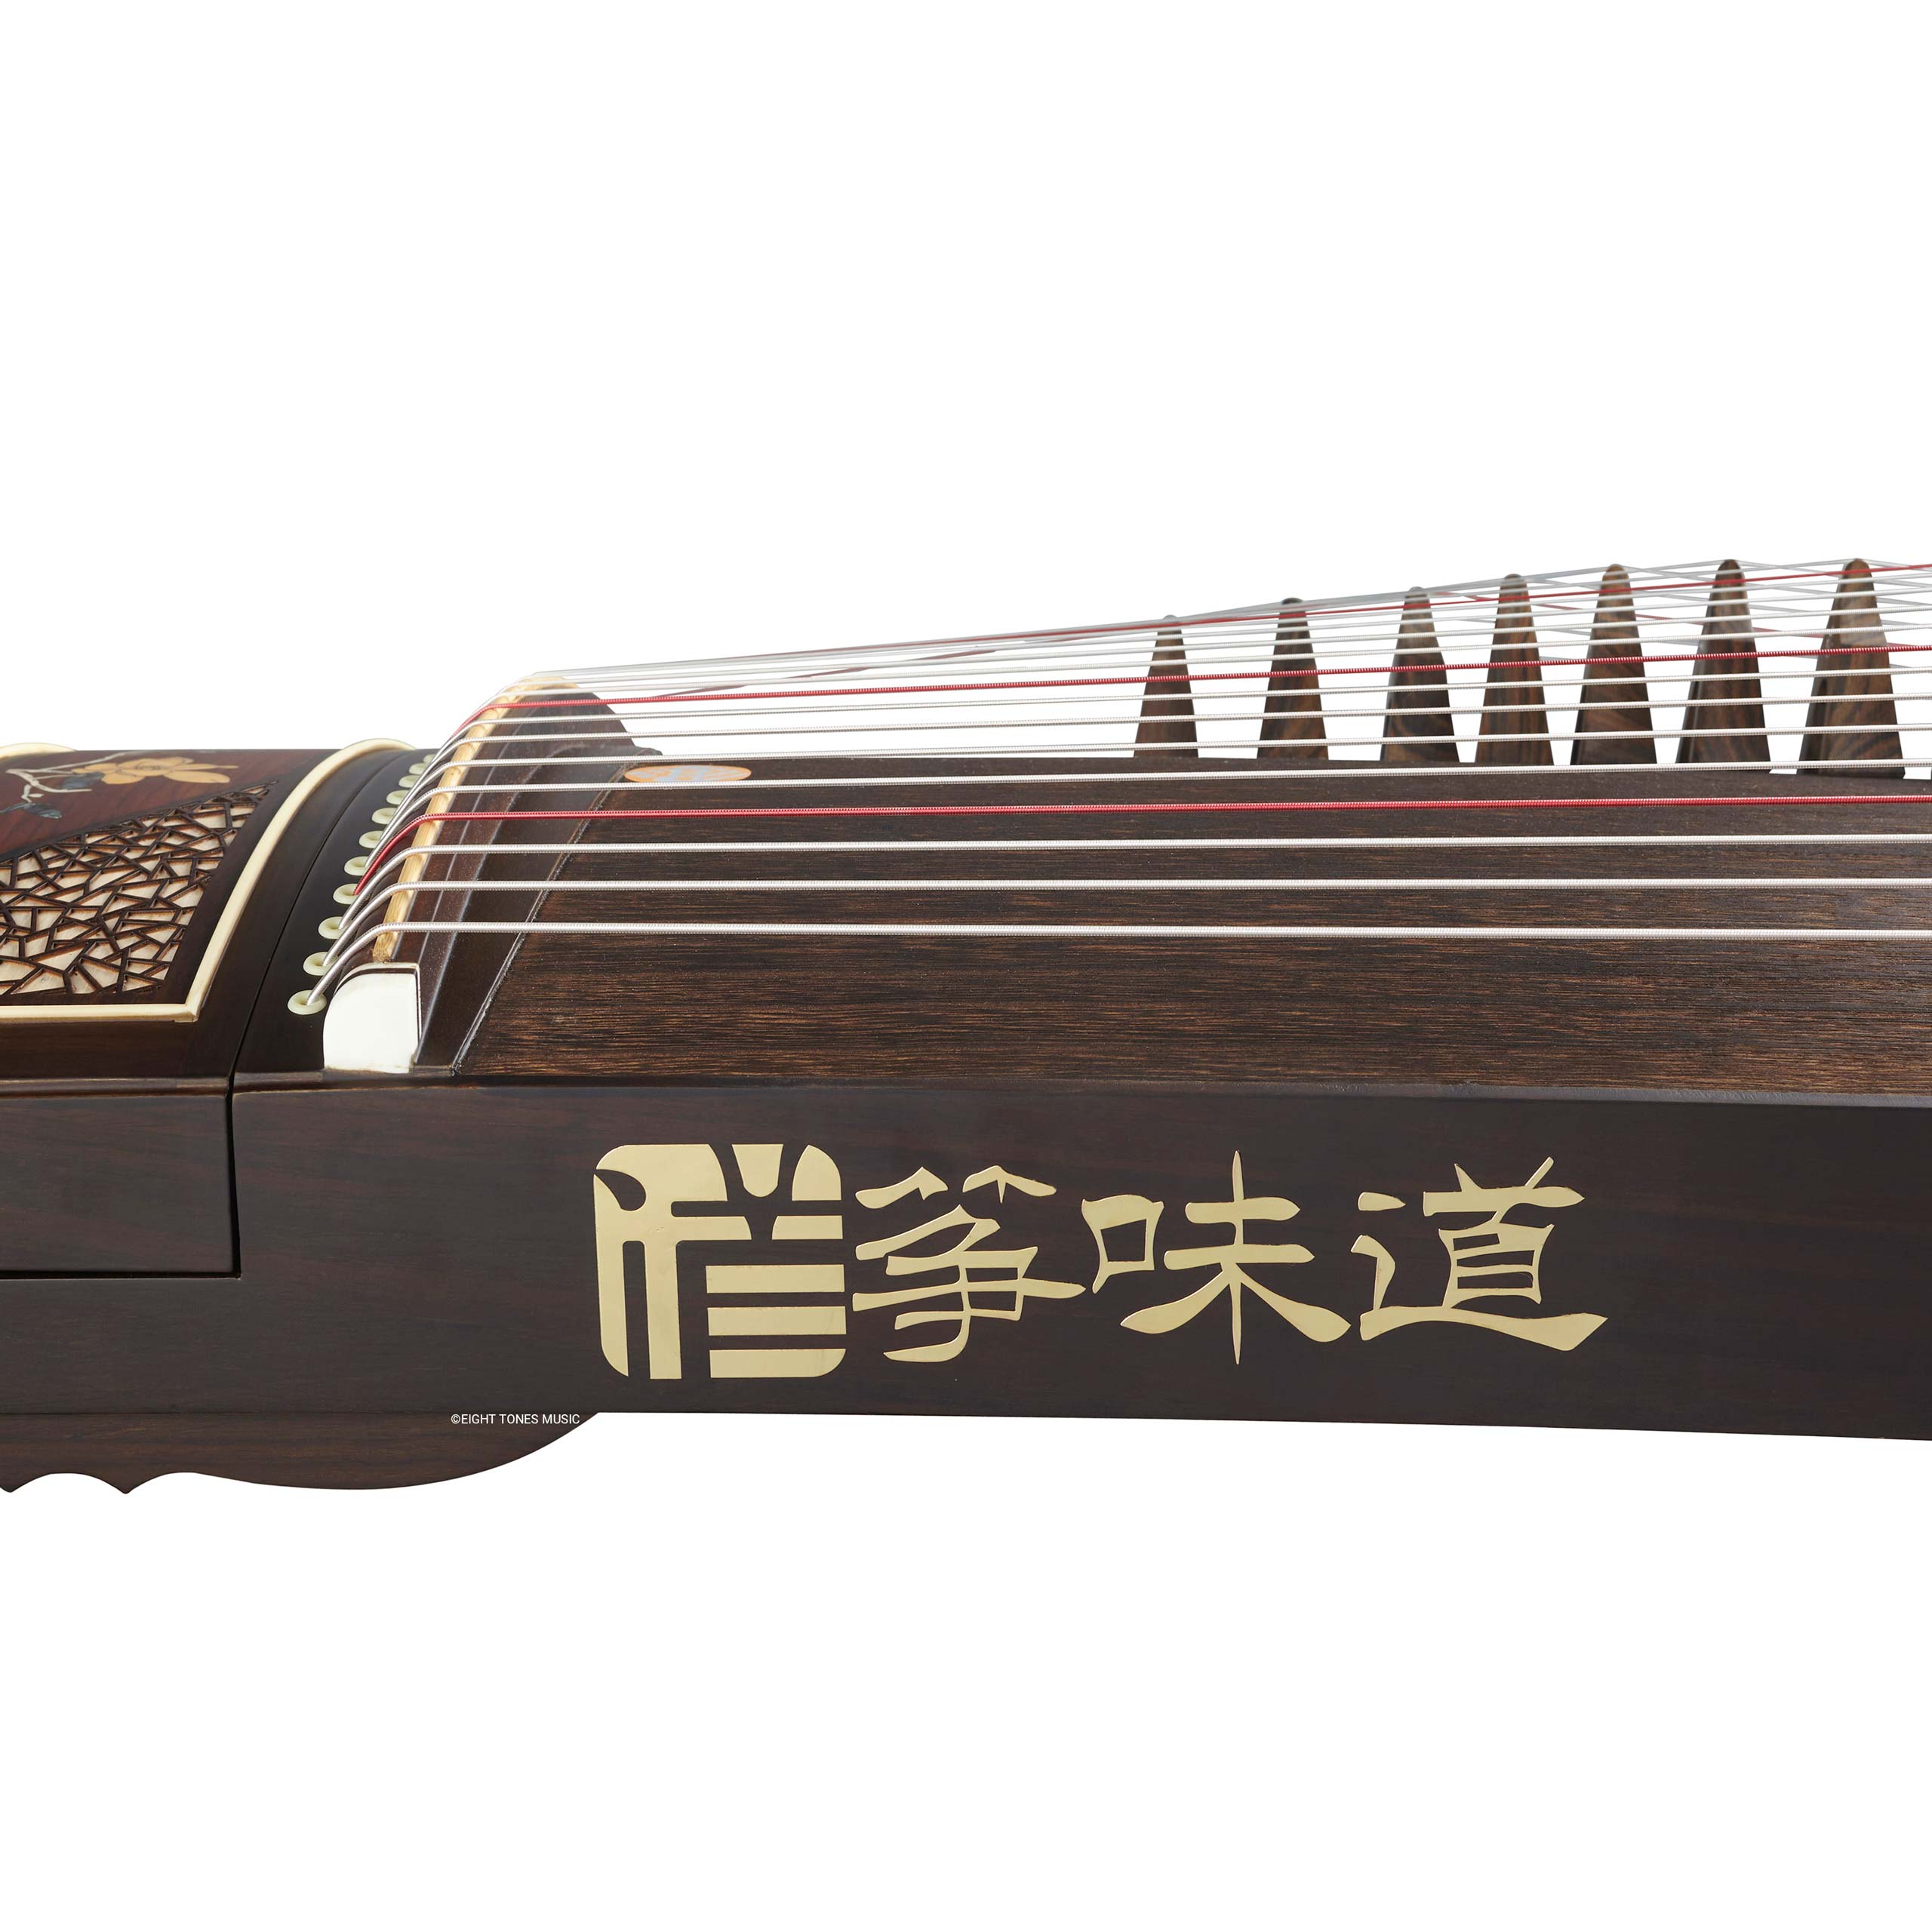 Zhonghao Winter's Blossom Guzheng right profile